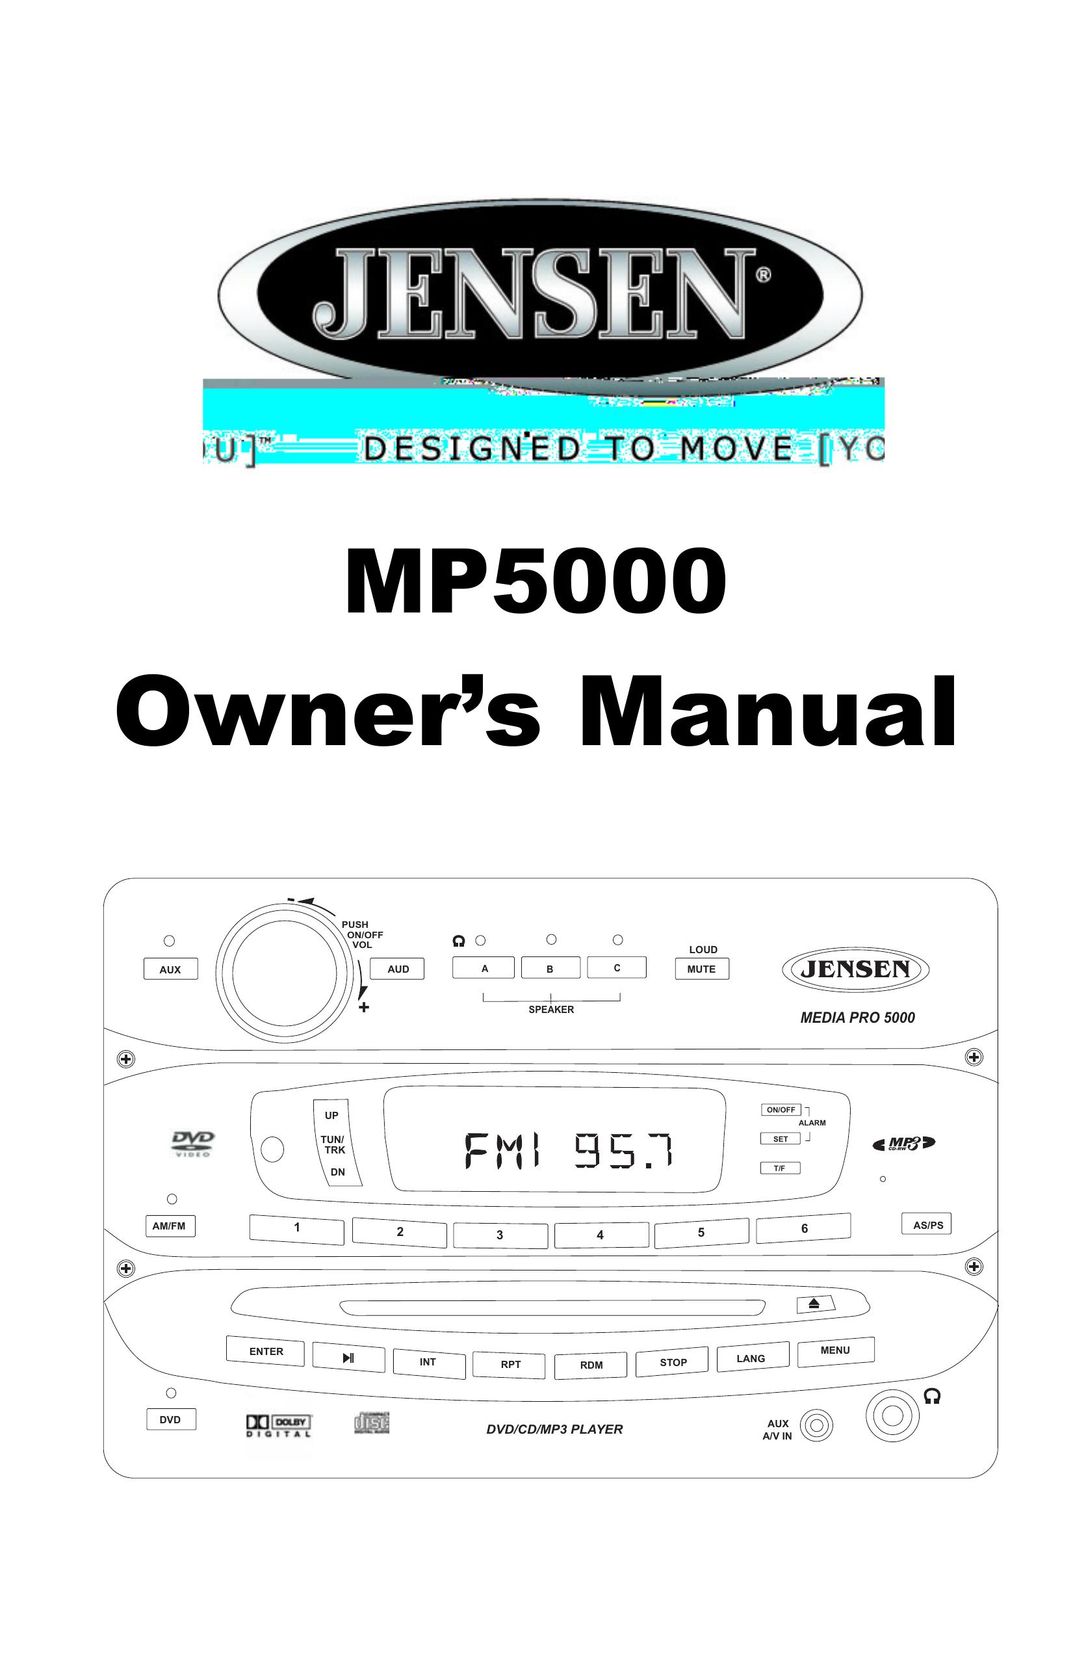 Jensen Tools Media PRO 5000 Stereo System User Manual